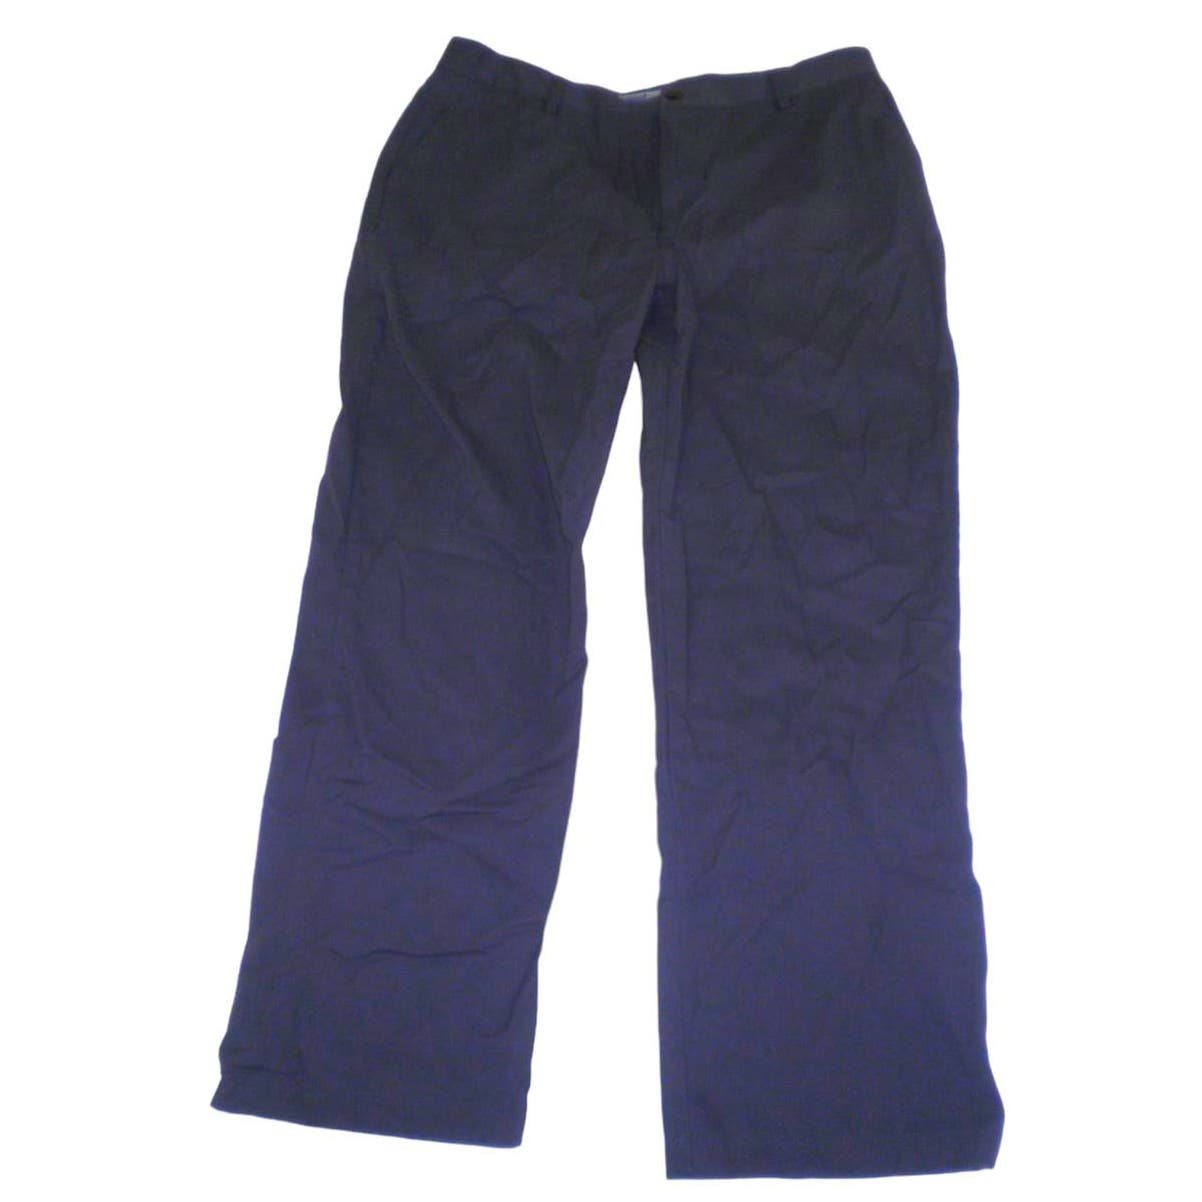 Men's Classic-Fit Wrinkle-Resistant Flat-Front Chino Pants, Black, 36W x 31L